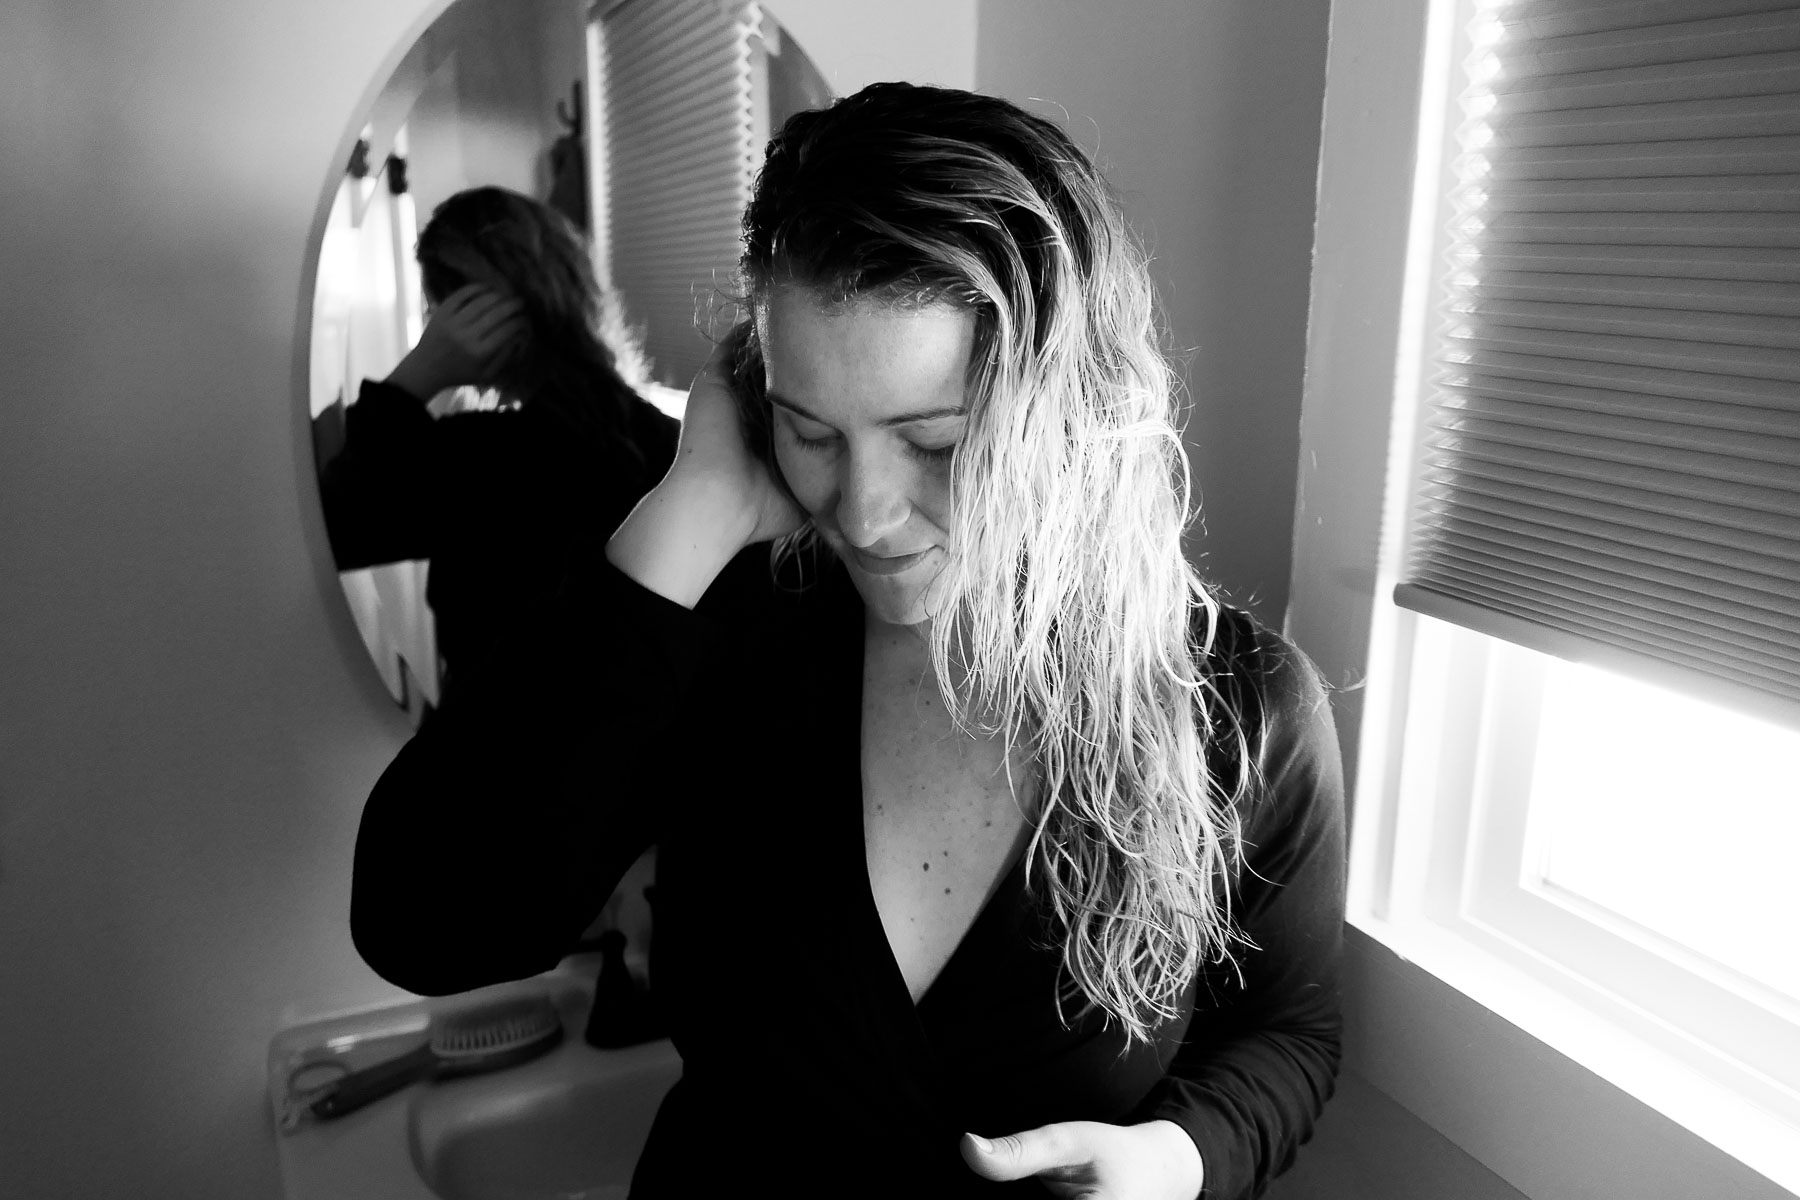 Black and White Image of Girl Tucking Hair Behind Ear - Do Shampoo Bar Really Work?